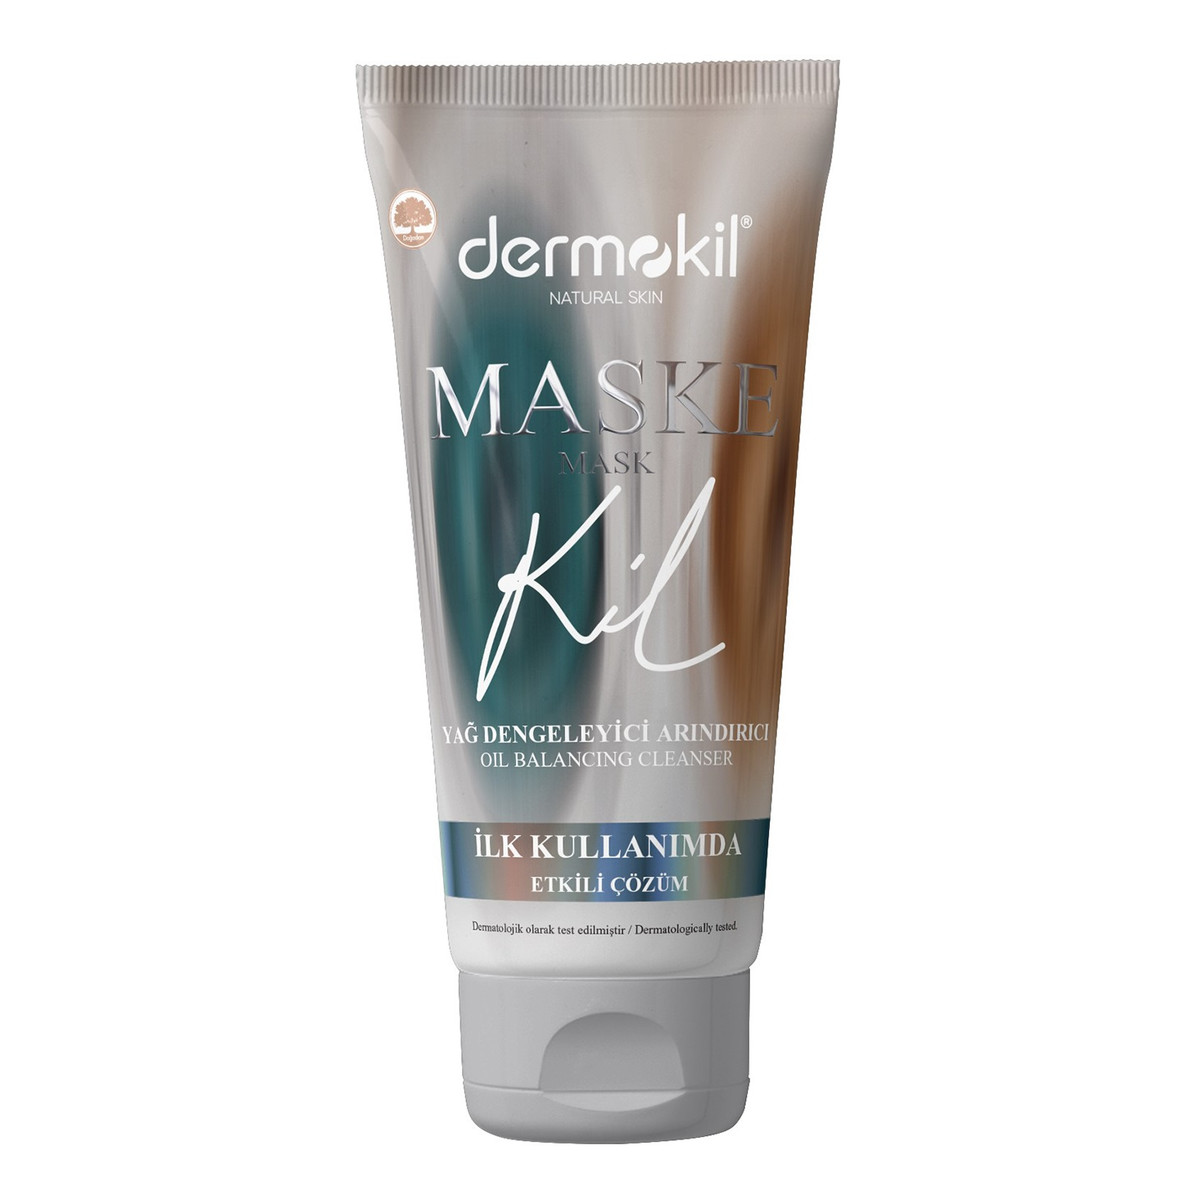 Dermokil Natural skin oil balancing cleanser clay mask maseczka z glinką 75ml